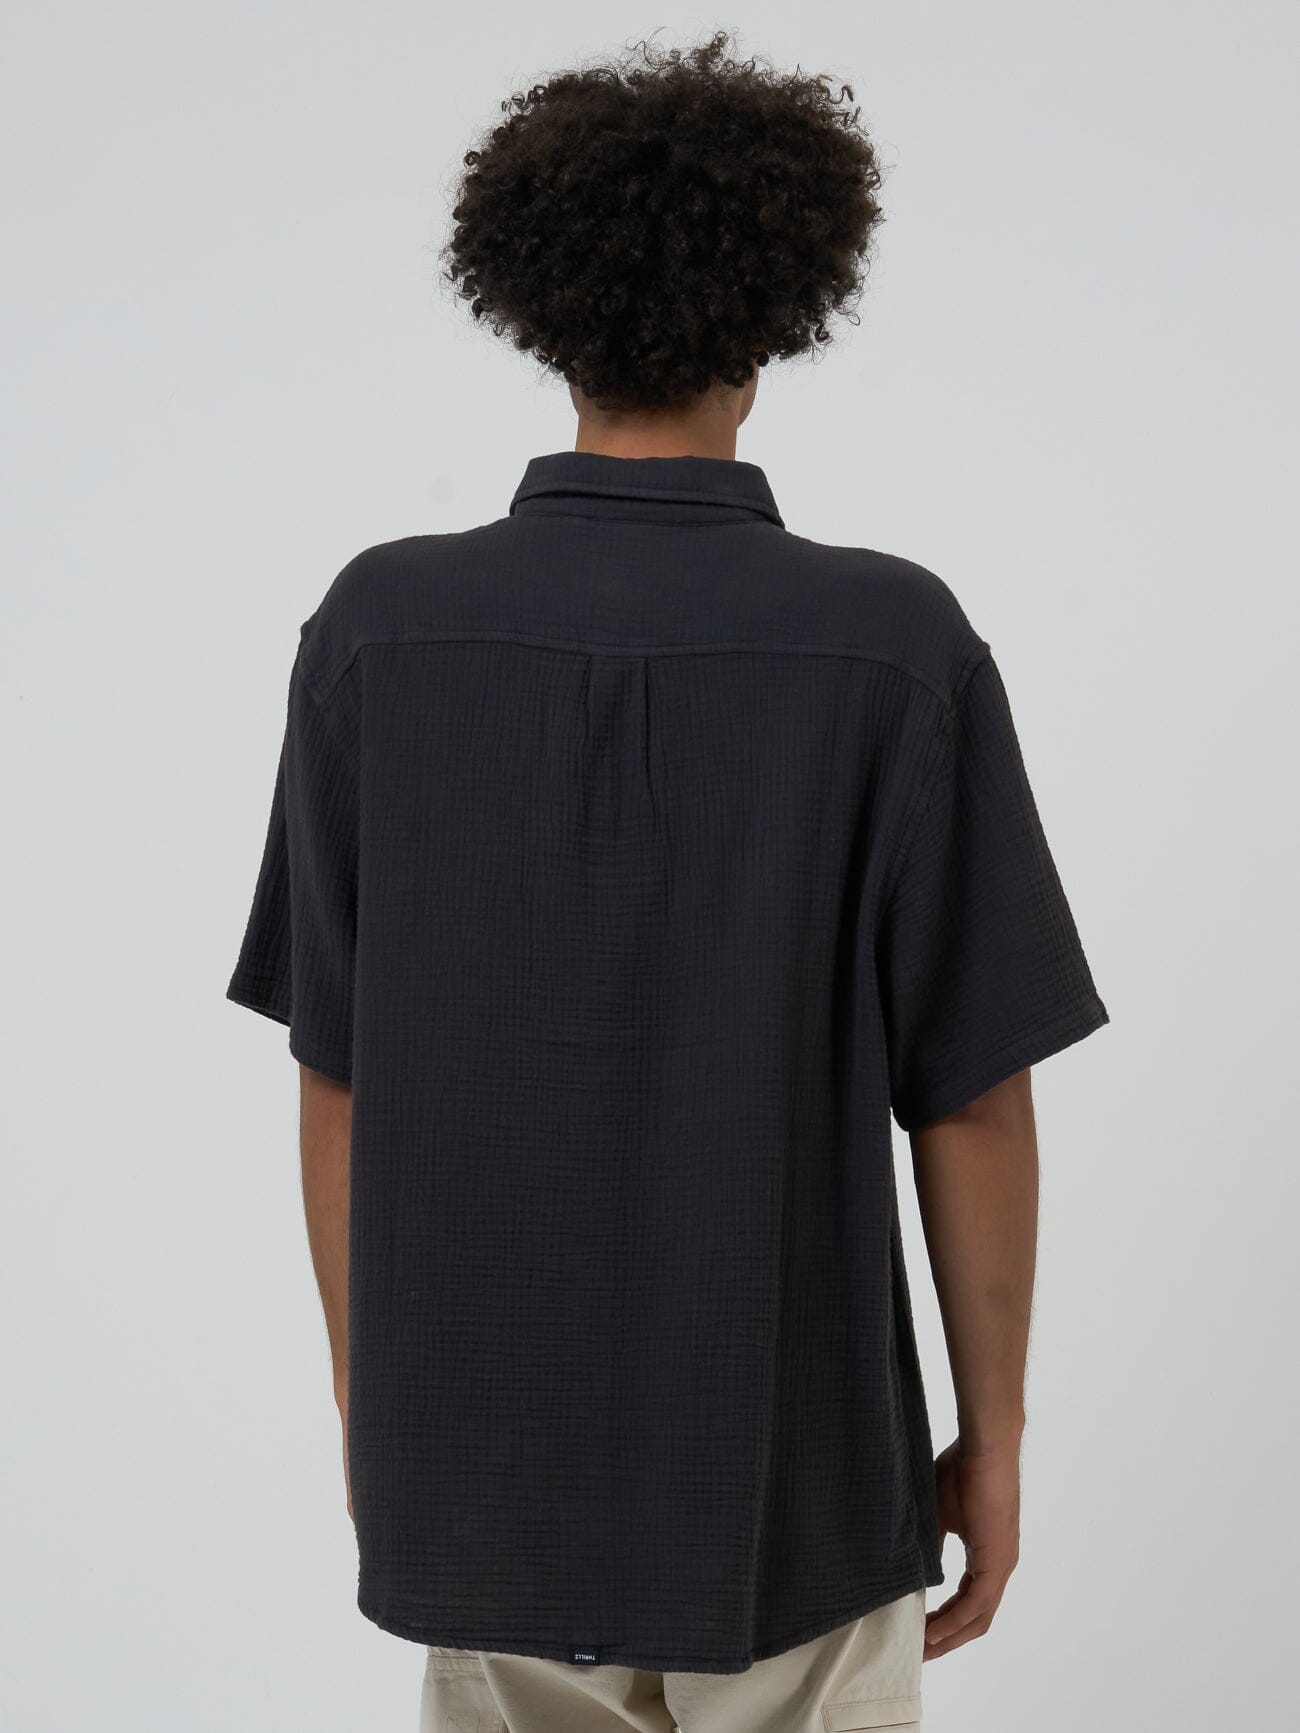 Minimal Thrills Seersucker Short Sleeve Shirt - Merch Black